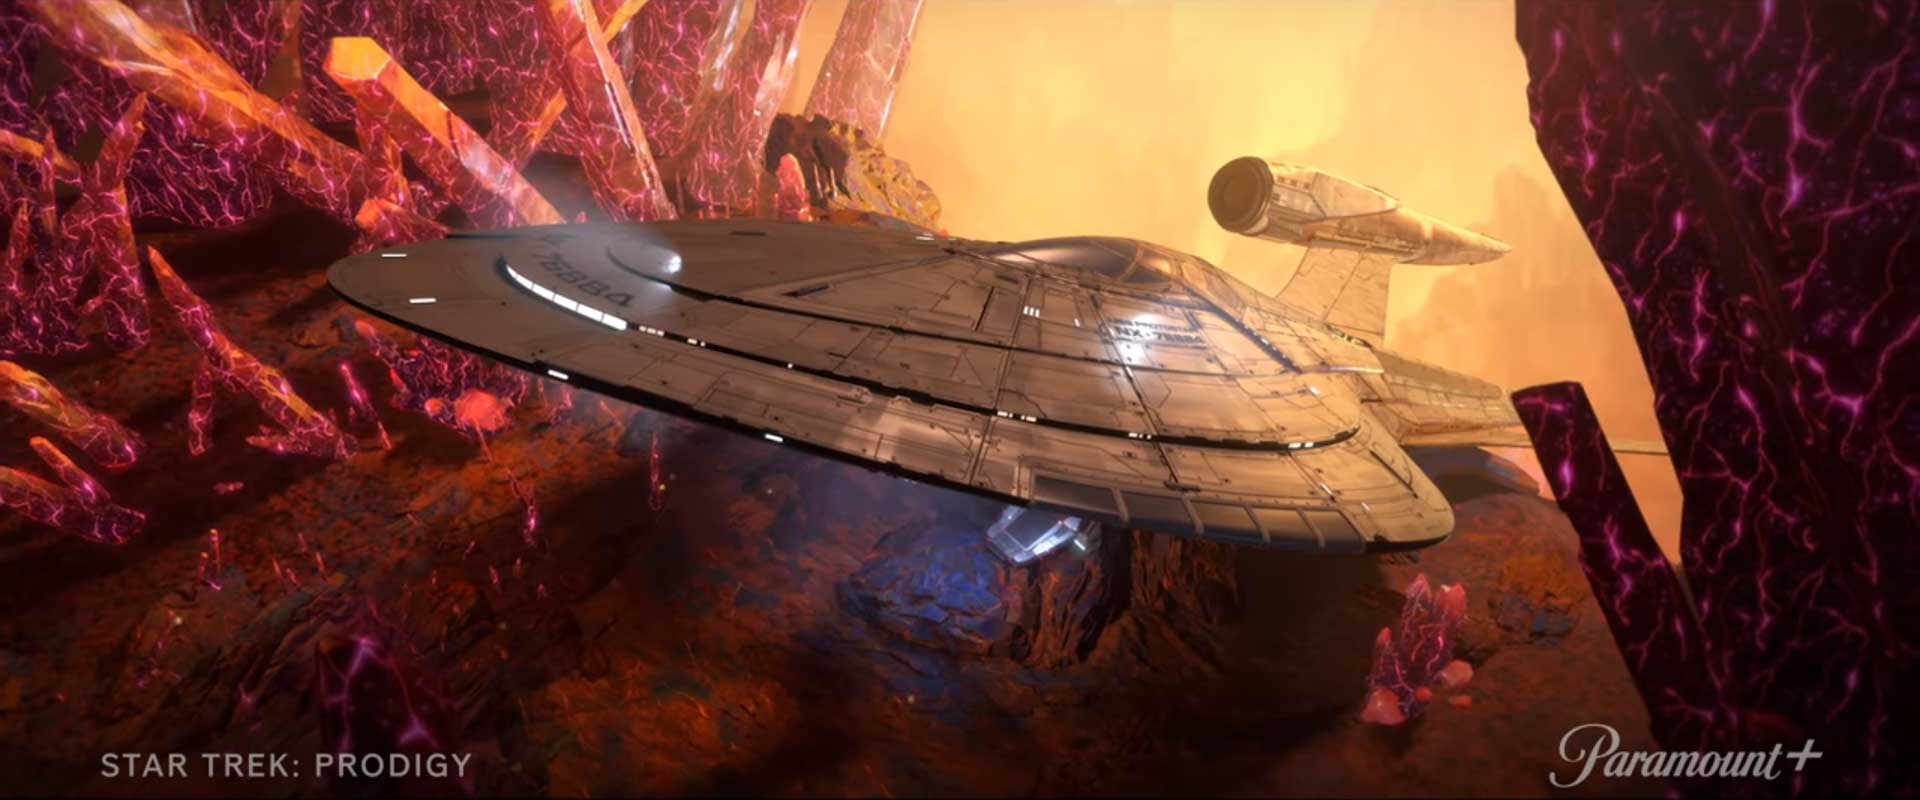 Star Trek: Prodigy Teaser Introduces Holo Janeway's Starship Con 2021